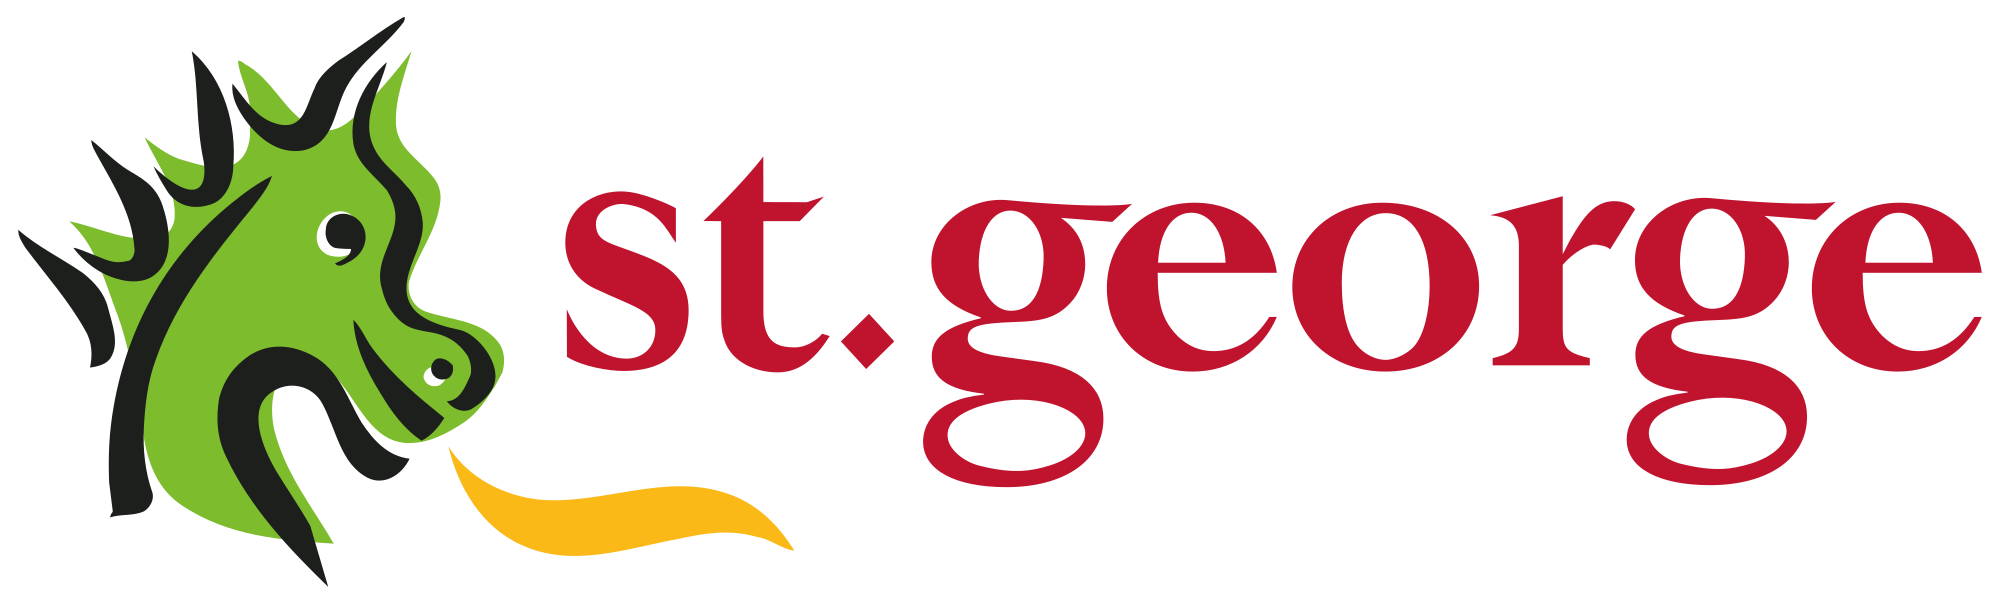 St George Bank Brand Logo